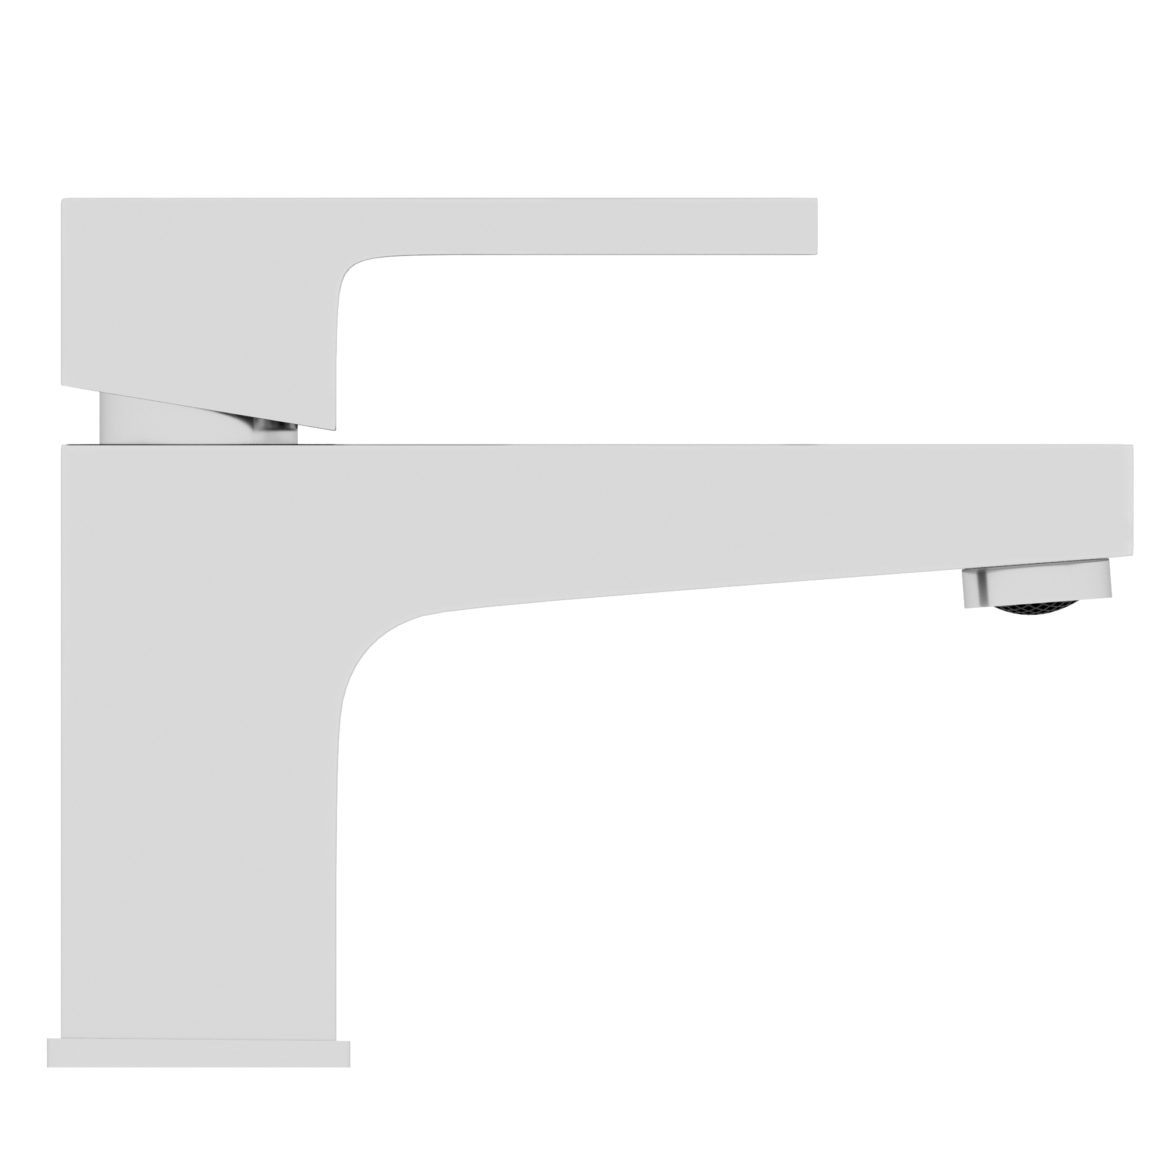  <a class="continue" href="https://www.flatpyramid.com/3d-models/architecture-3d-models/objects/boou-faucet/">Continue Reading<span> Boou faucet</span></a>